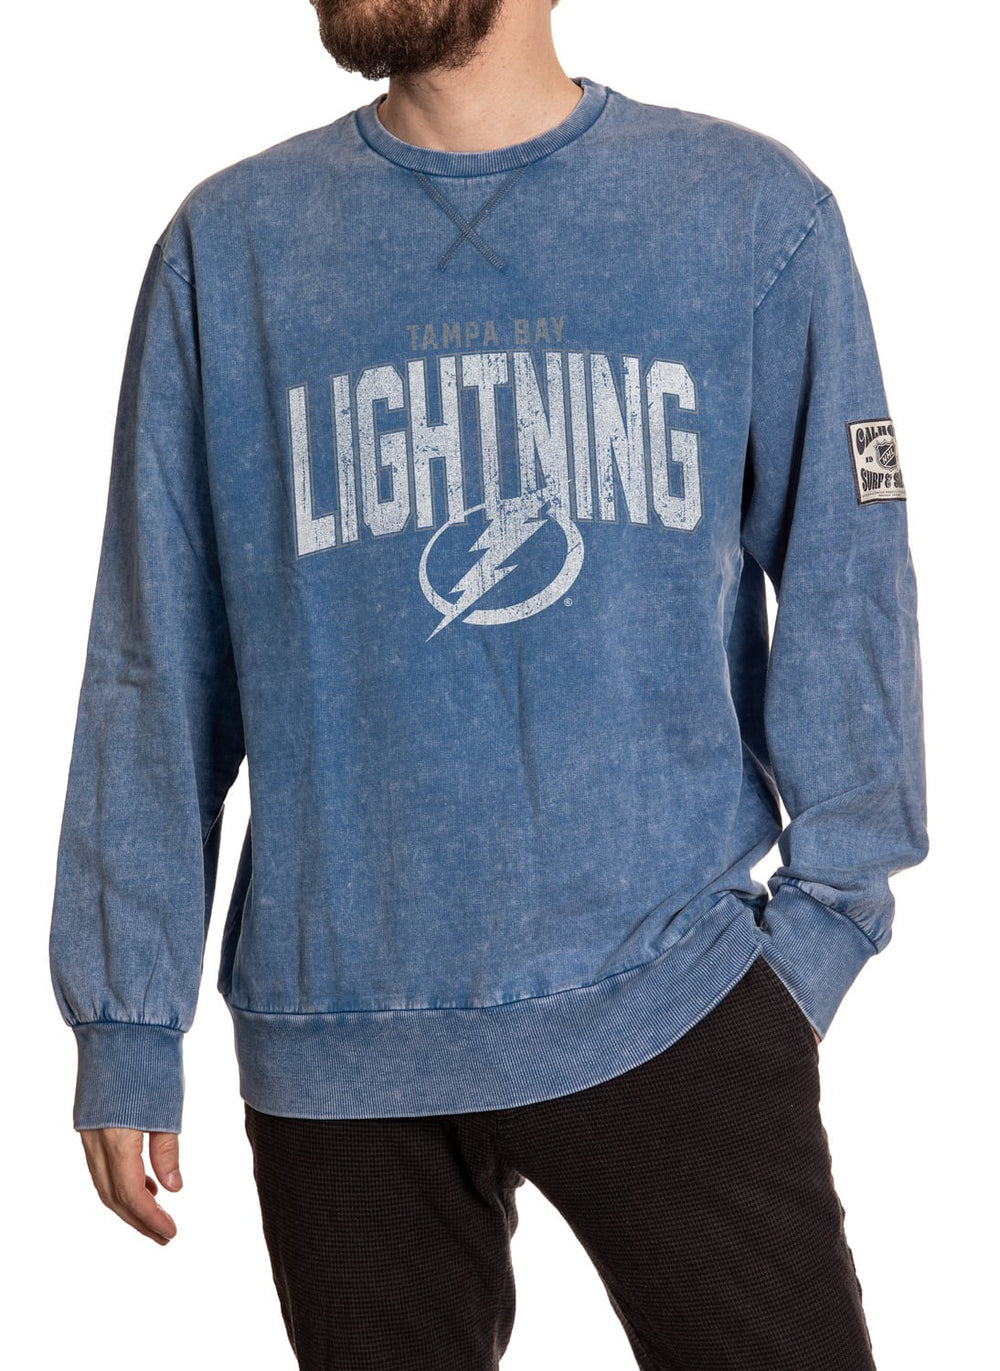 Women's Concepts Sport Royal Tampa Bay Lightning Tri-Blend Mainstream Terry Short Sleeve Sweatshirt Top Size: Large